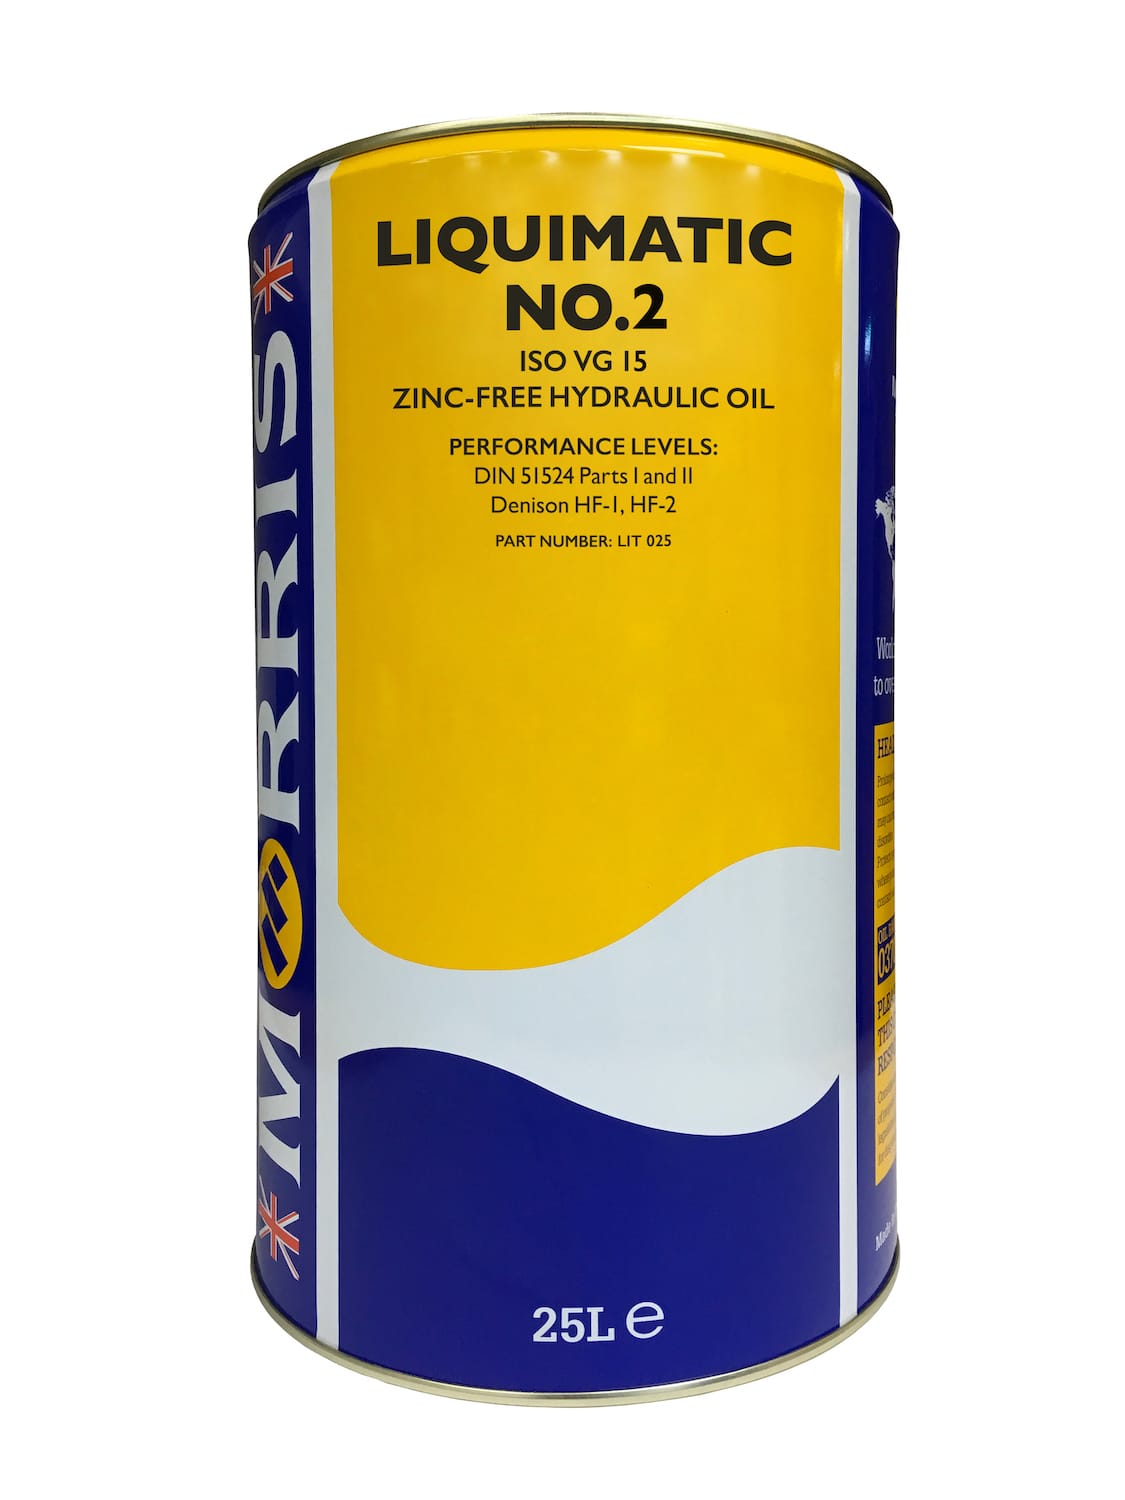 Liquimatic 2 (ISO 15)